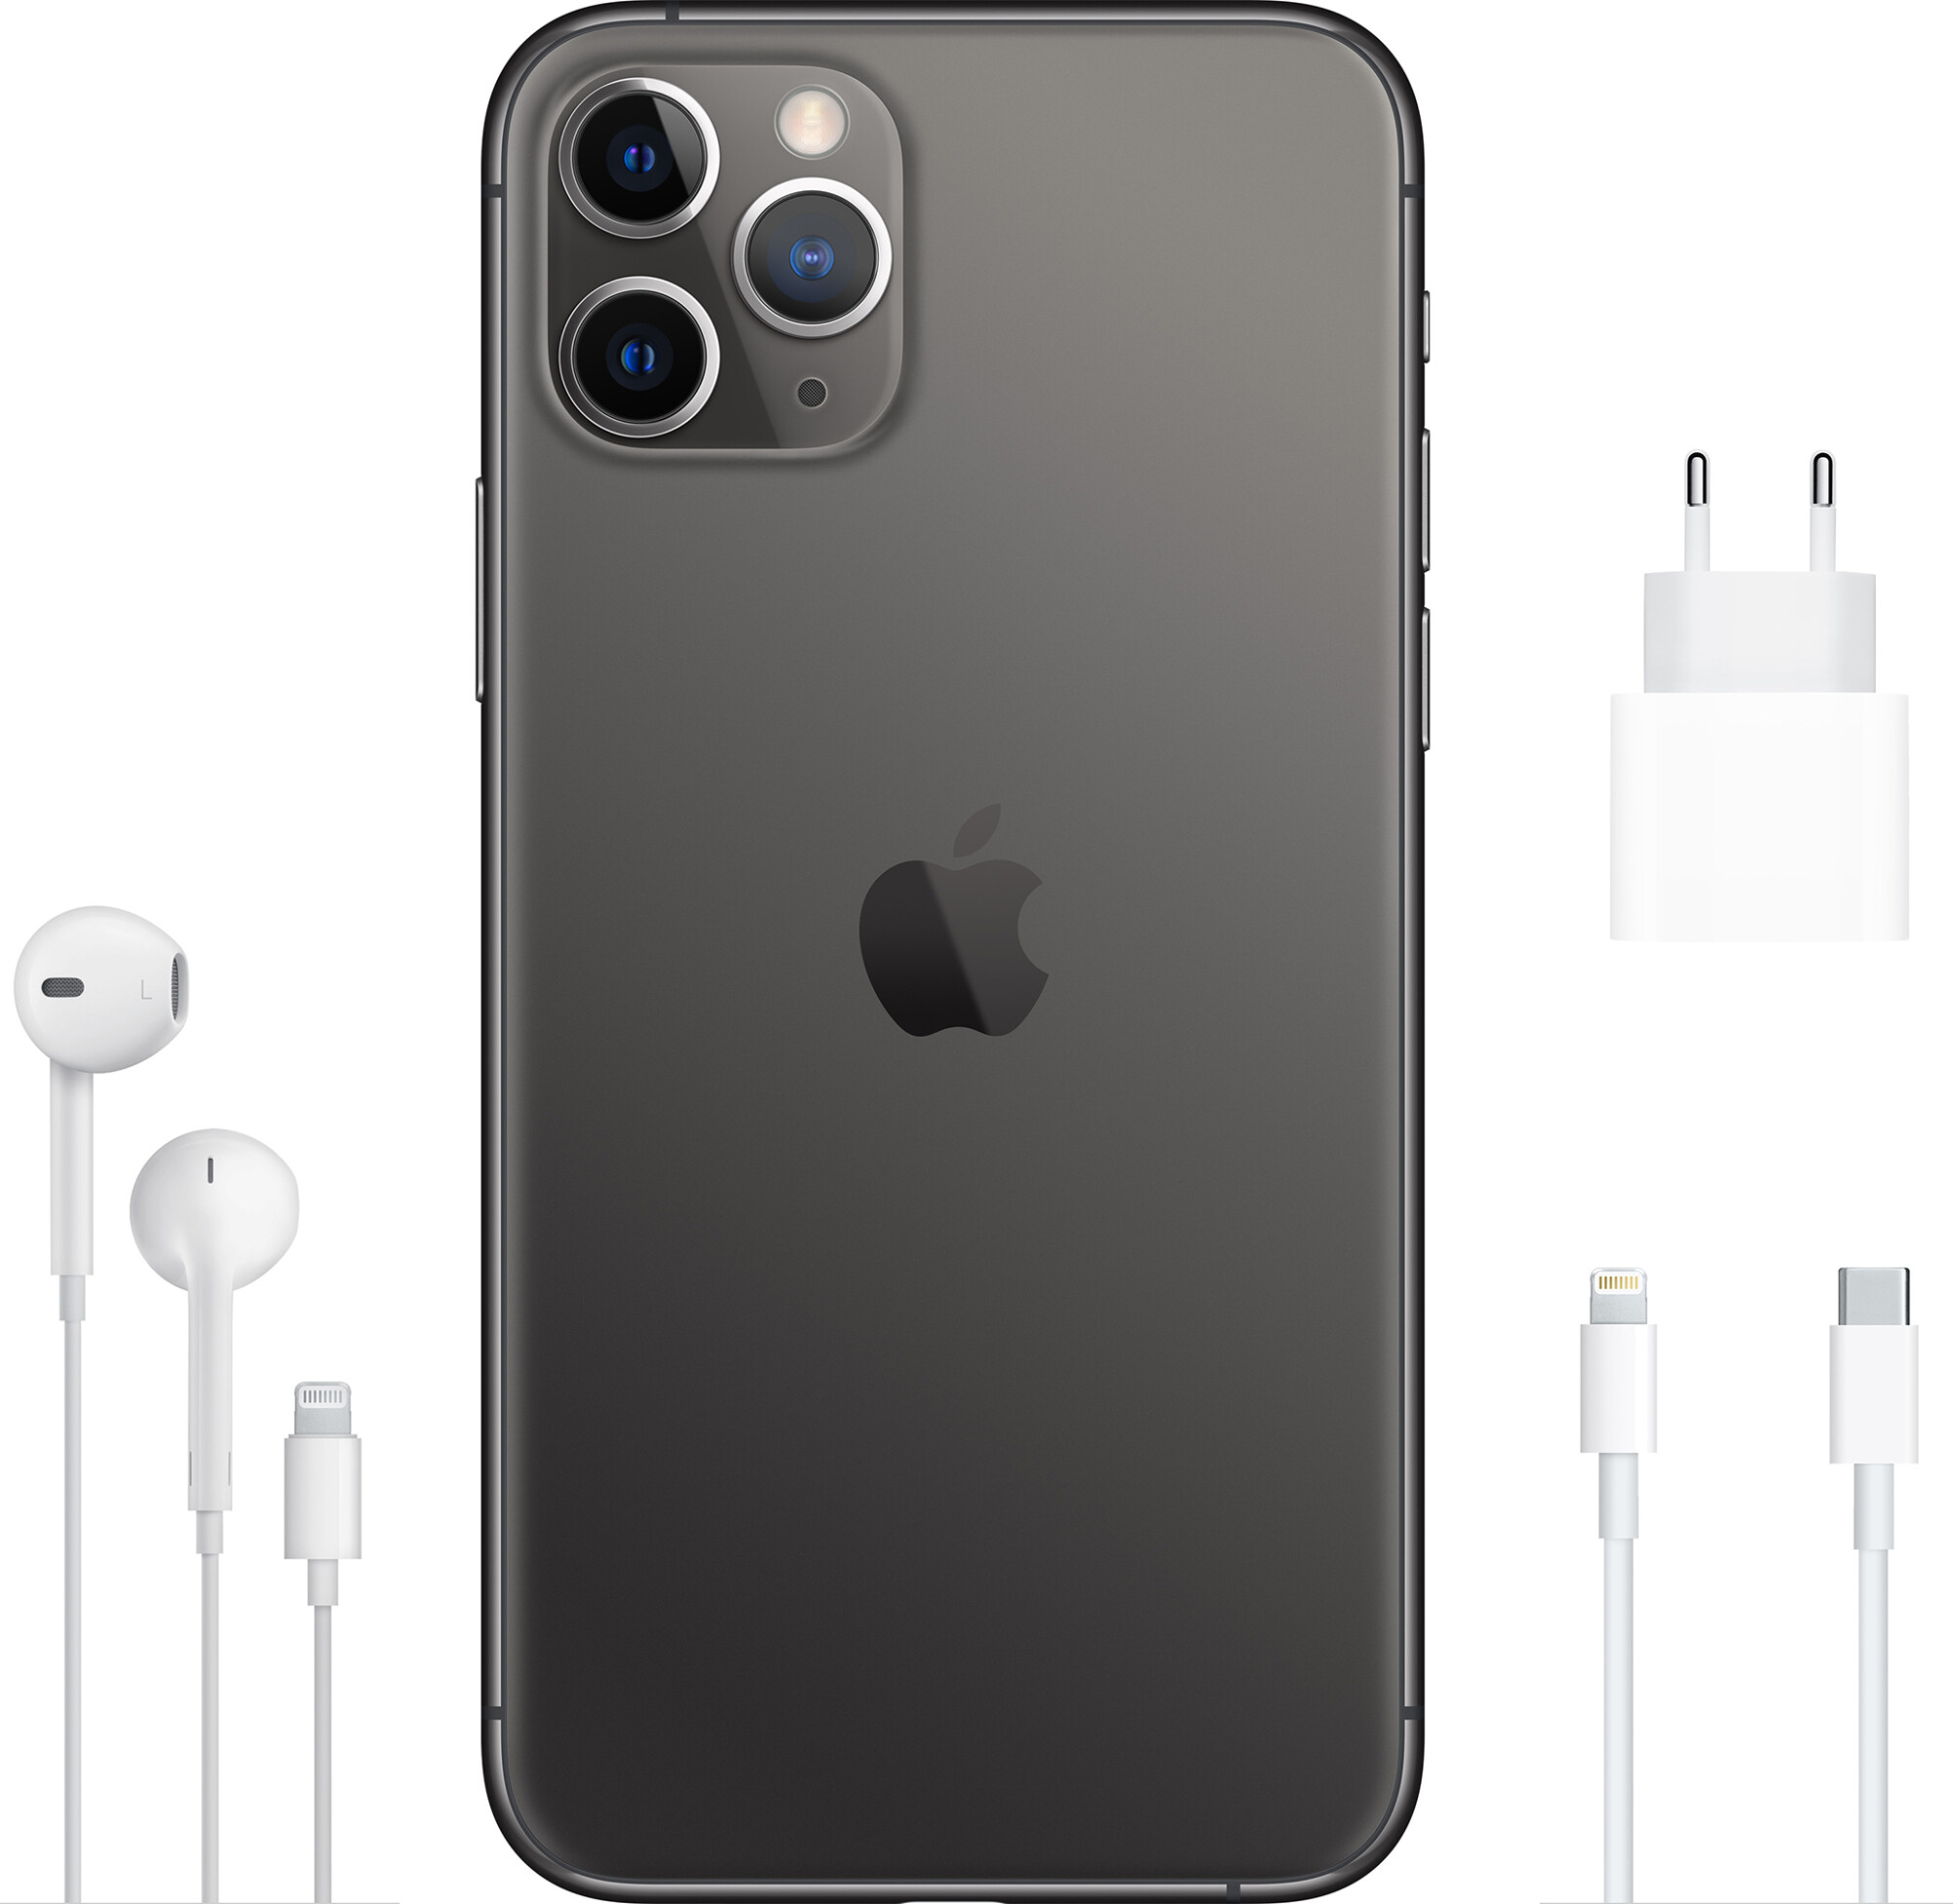 Apple iPhone 11 Pro 256GB Space Gray (MWCM2)